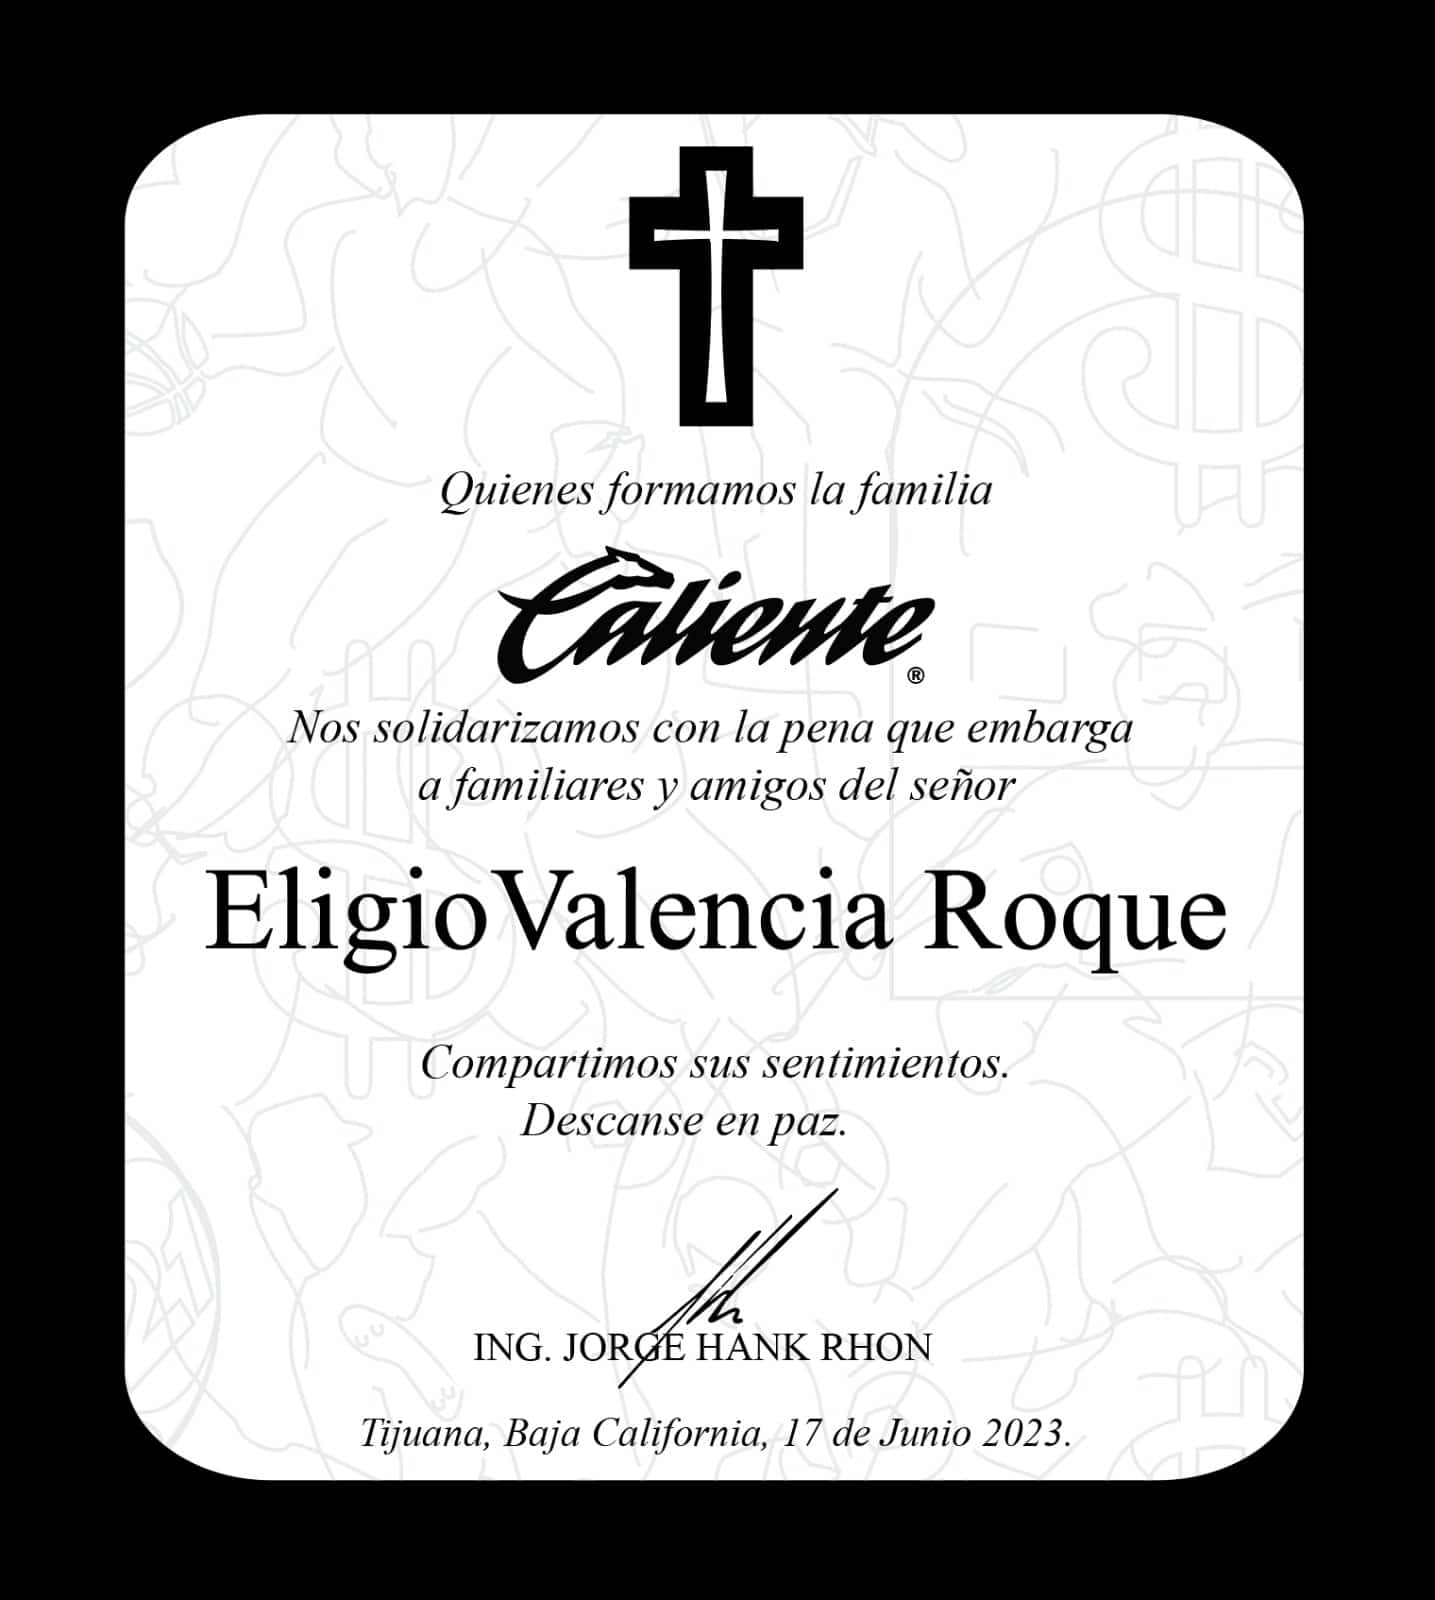 Eligio Valencia Roque